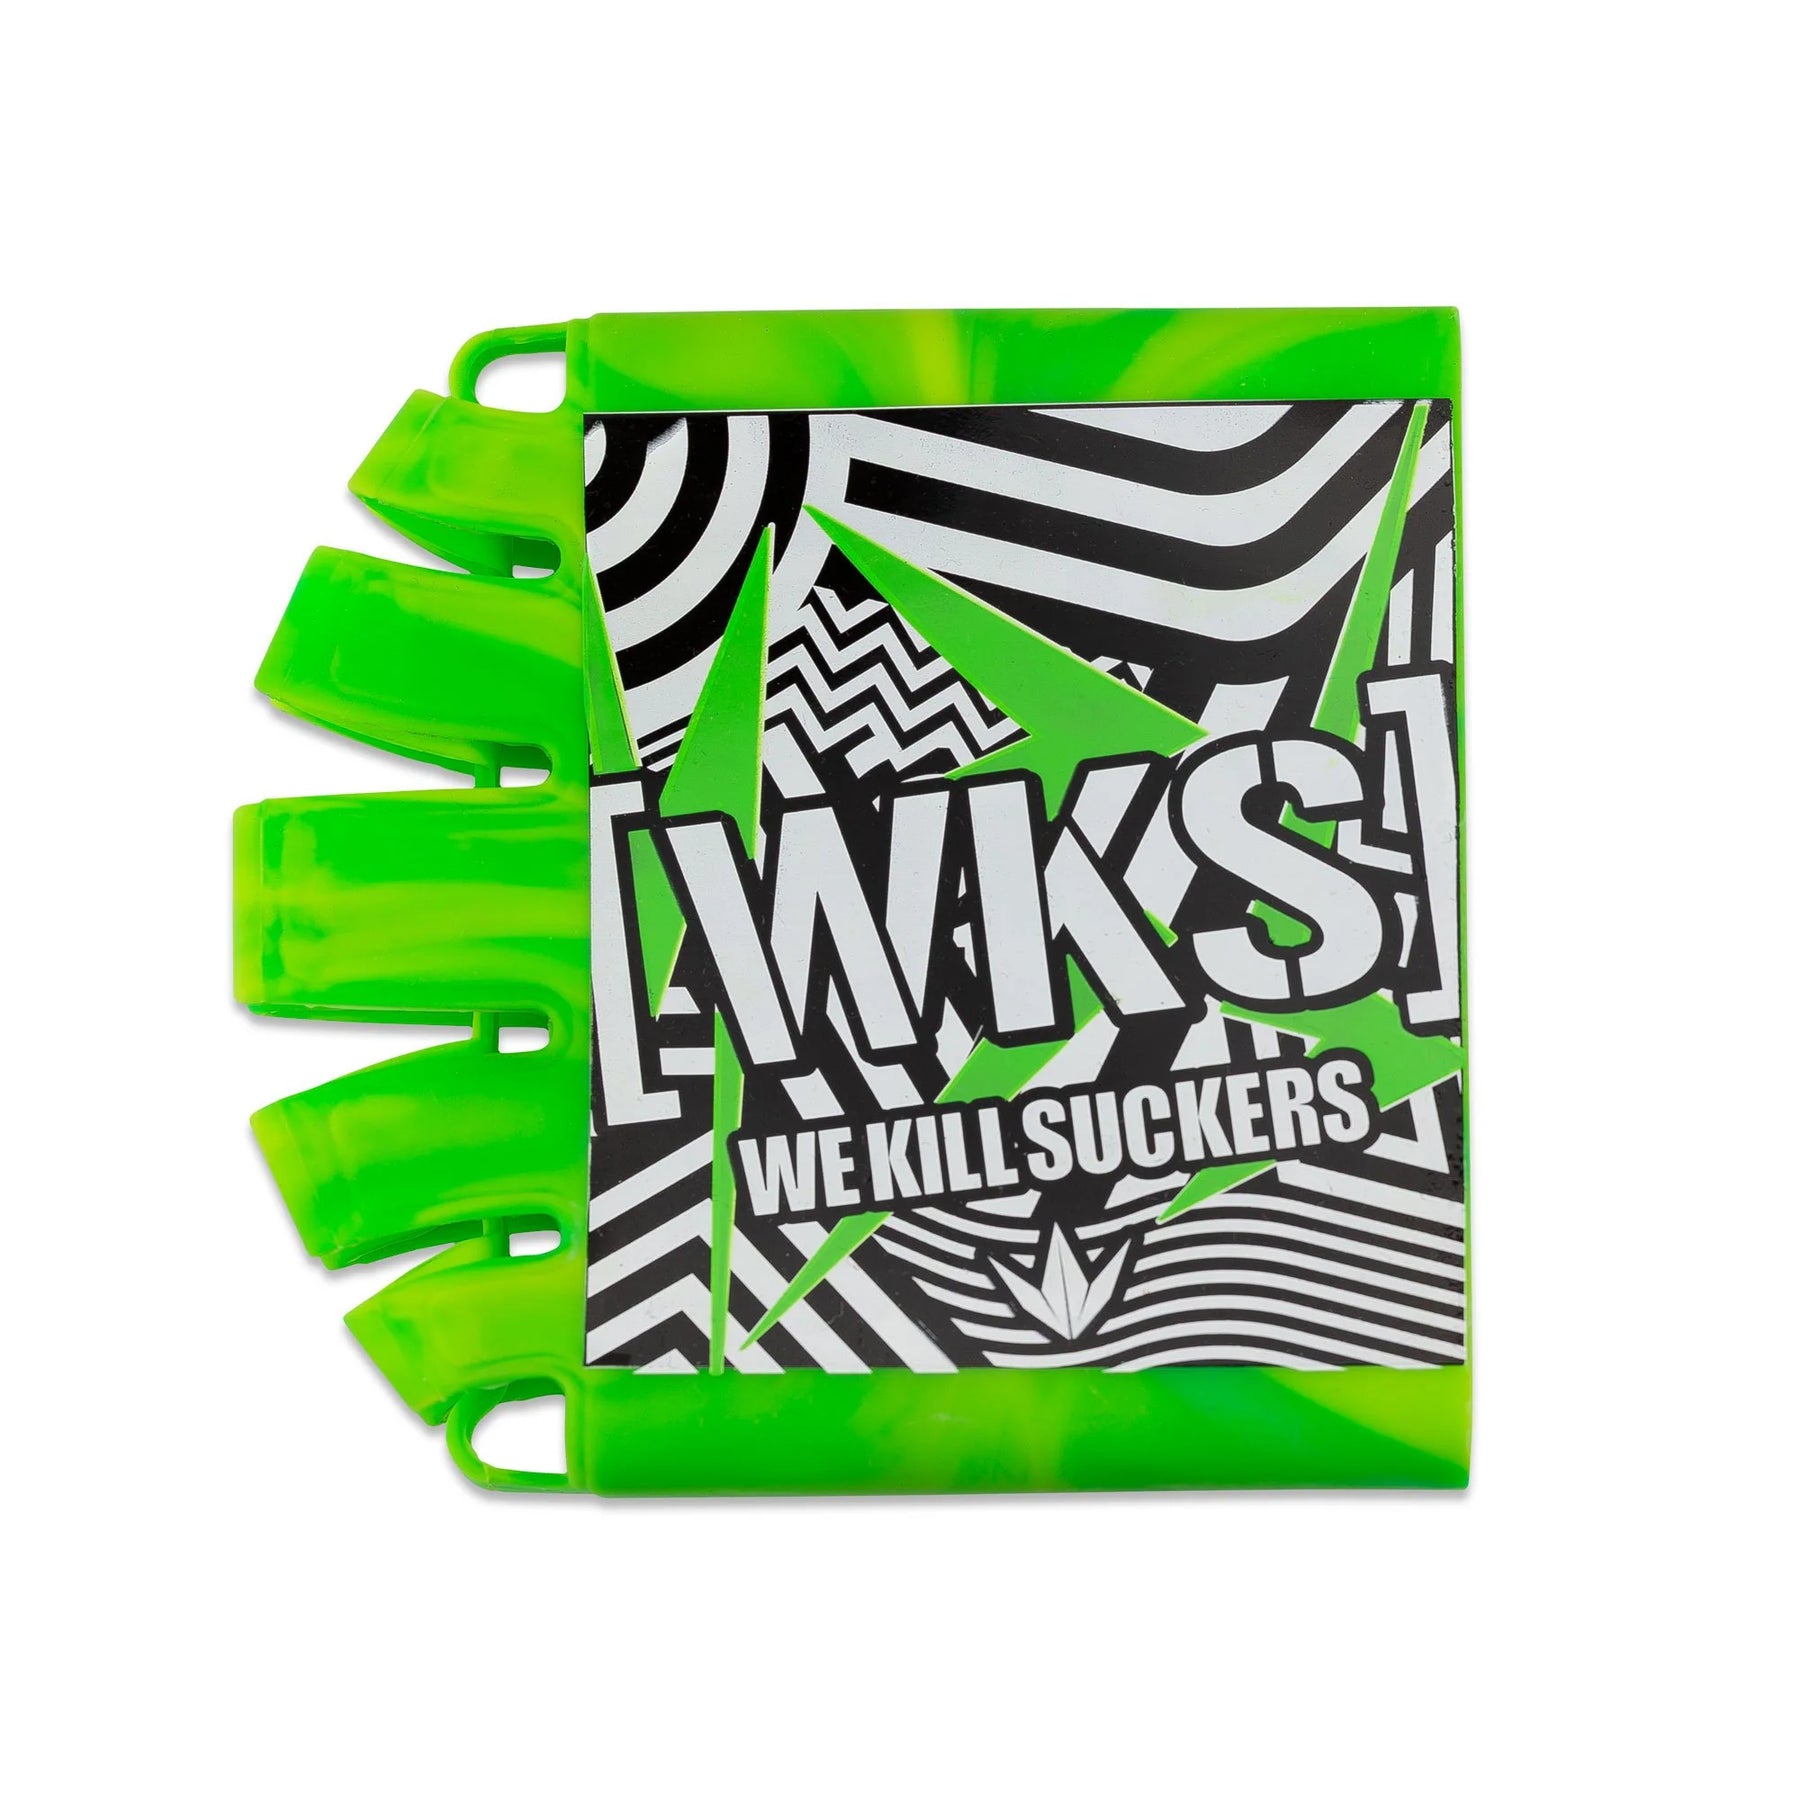 Bunkerkings - Knuckle Butt Paintball Air Tank Cover - WKS Shred - Lime